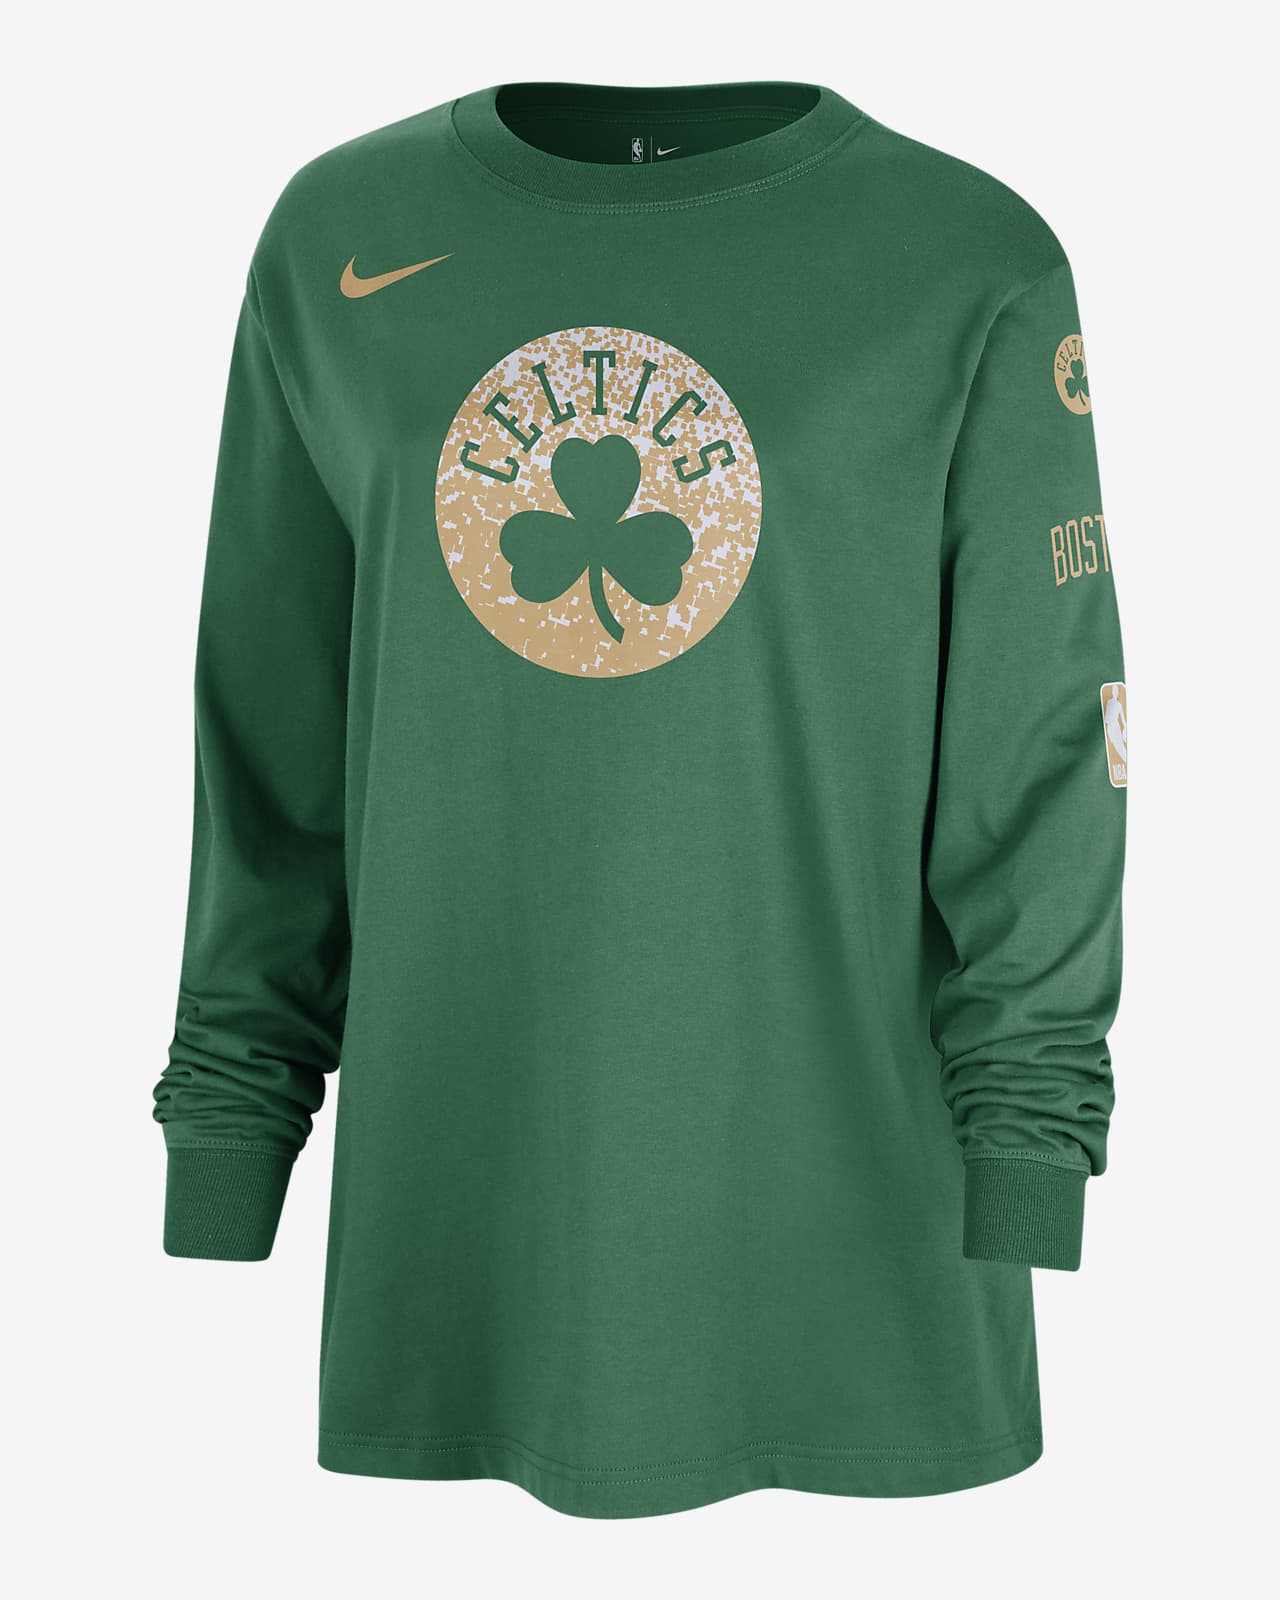 Playera de manga larga Nike de la NBA para mujer Boston Celtics Essential